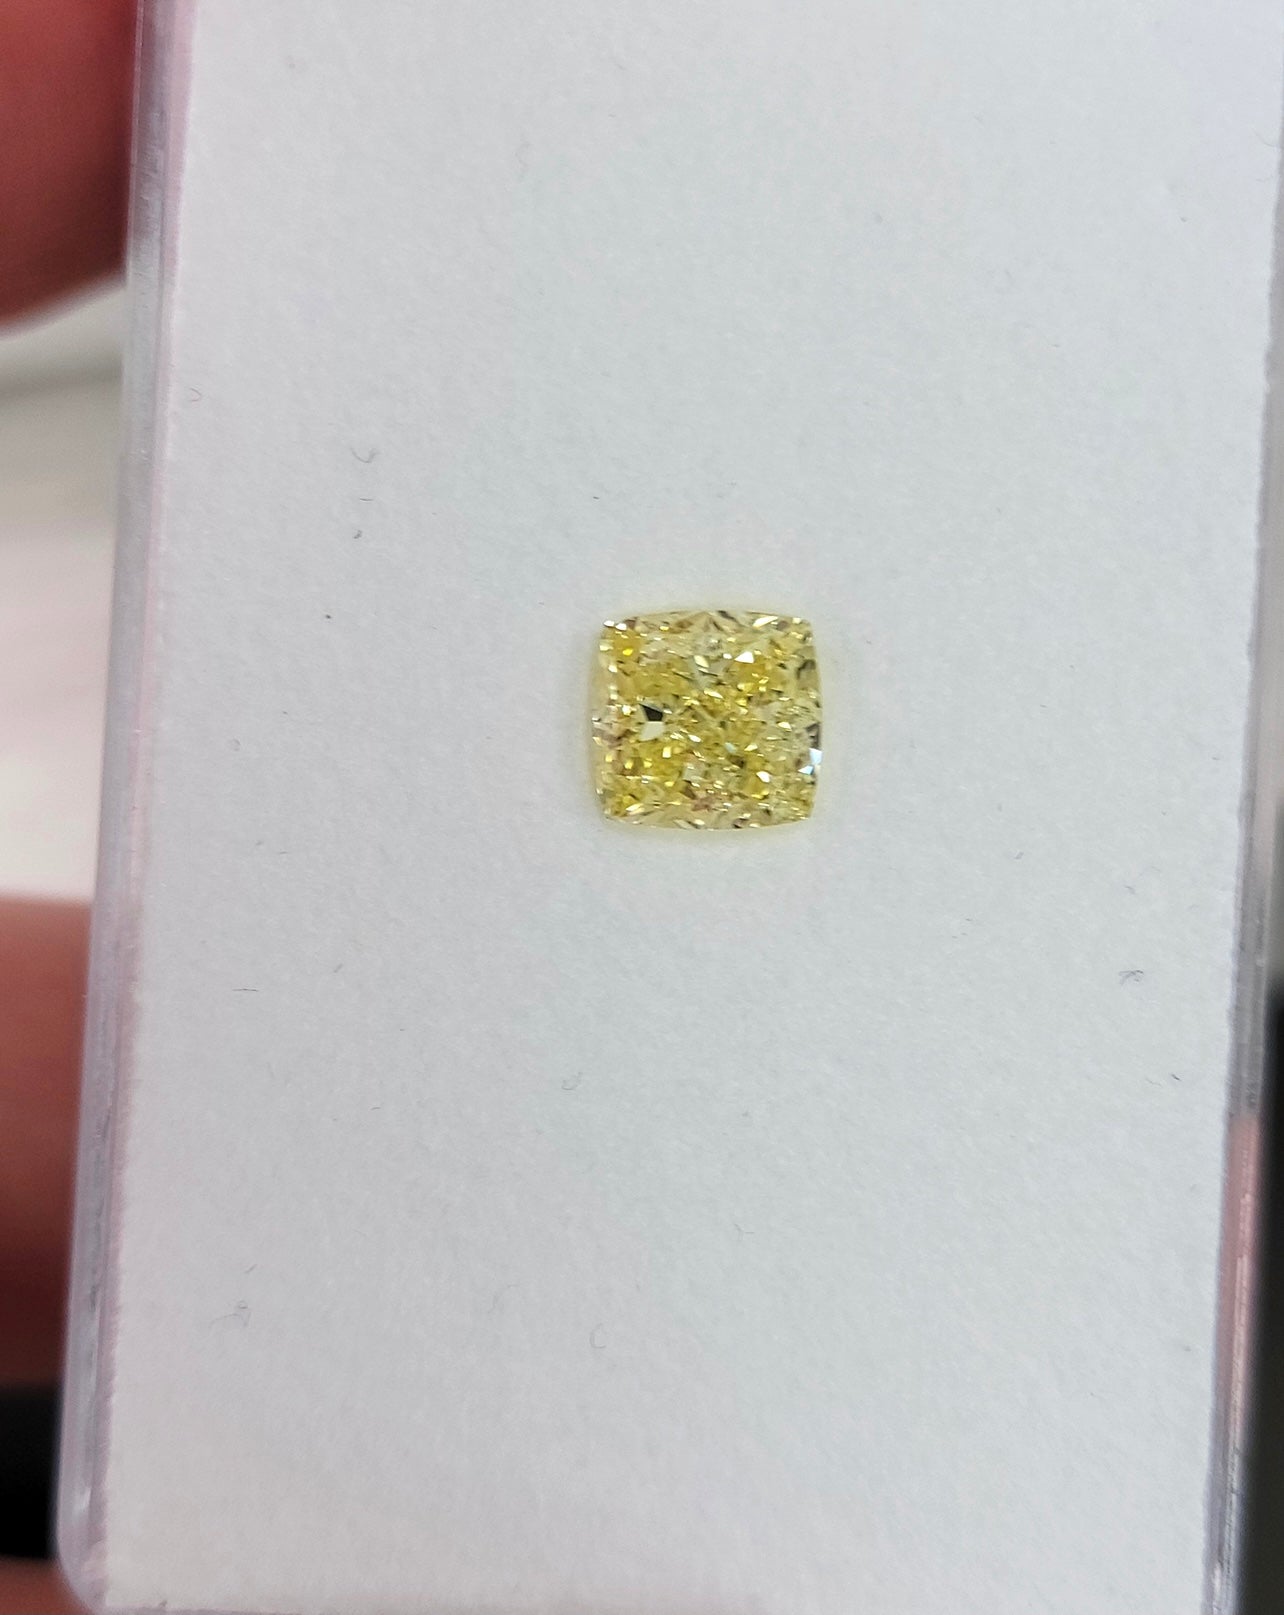 2.01ct Fancy Intense Yellow Cushion VVS2 GIA - Namdar Diamonds